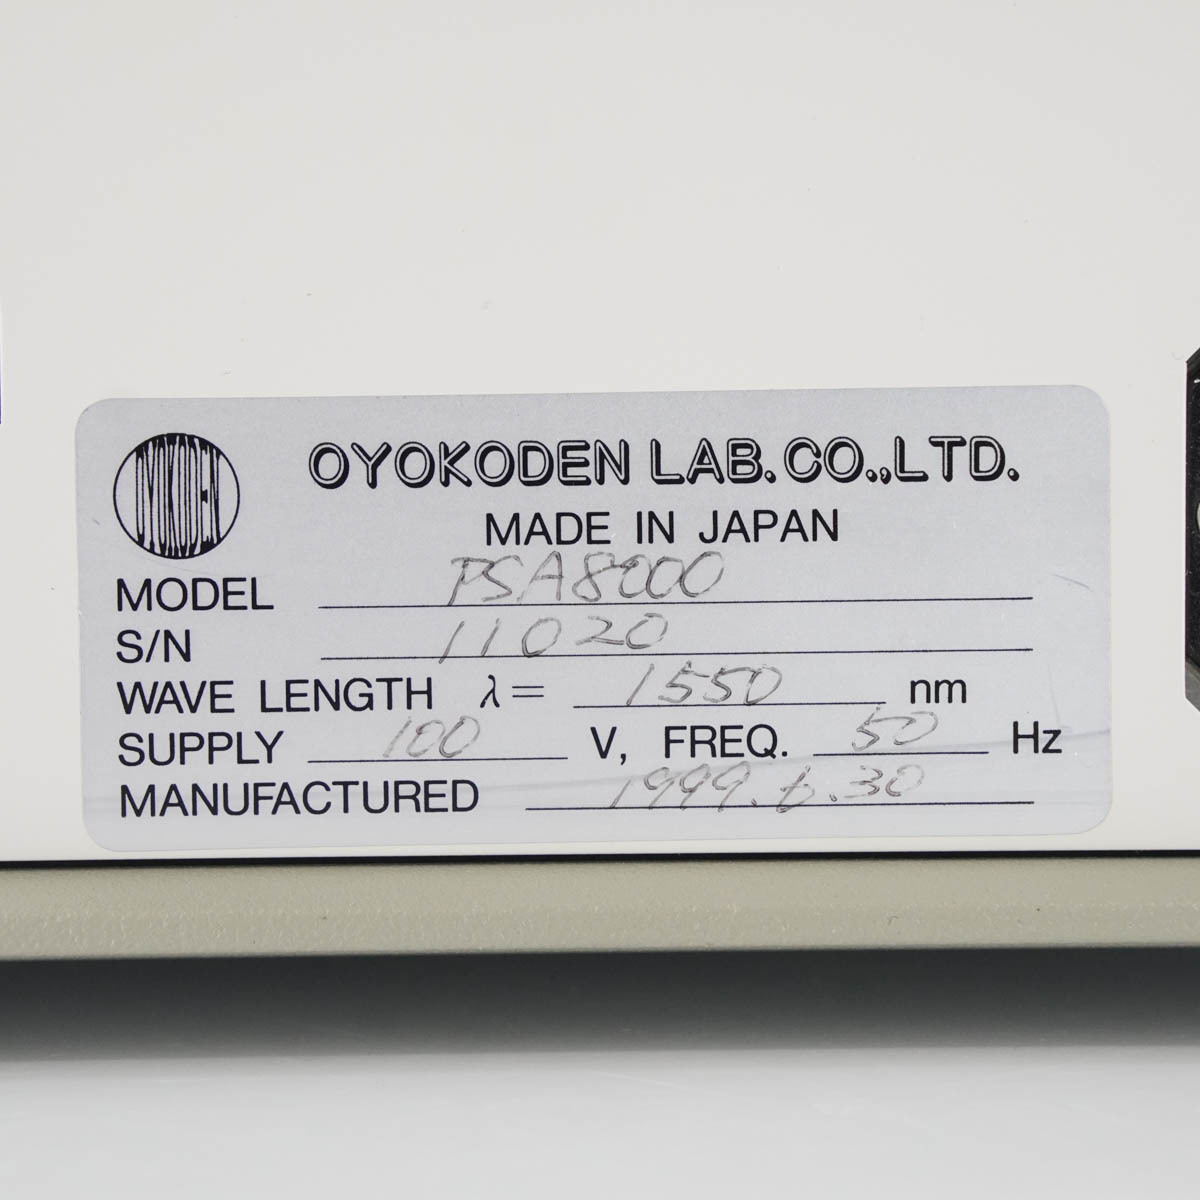 [DW] 8日保証 2台入荷 PSA8000 PSA-8000 OYOKODEN LAB 応用光電研究室 偏波コントローラー[05076-0069]_画像10